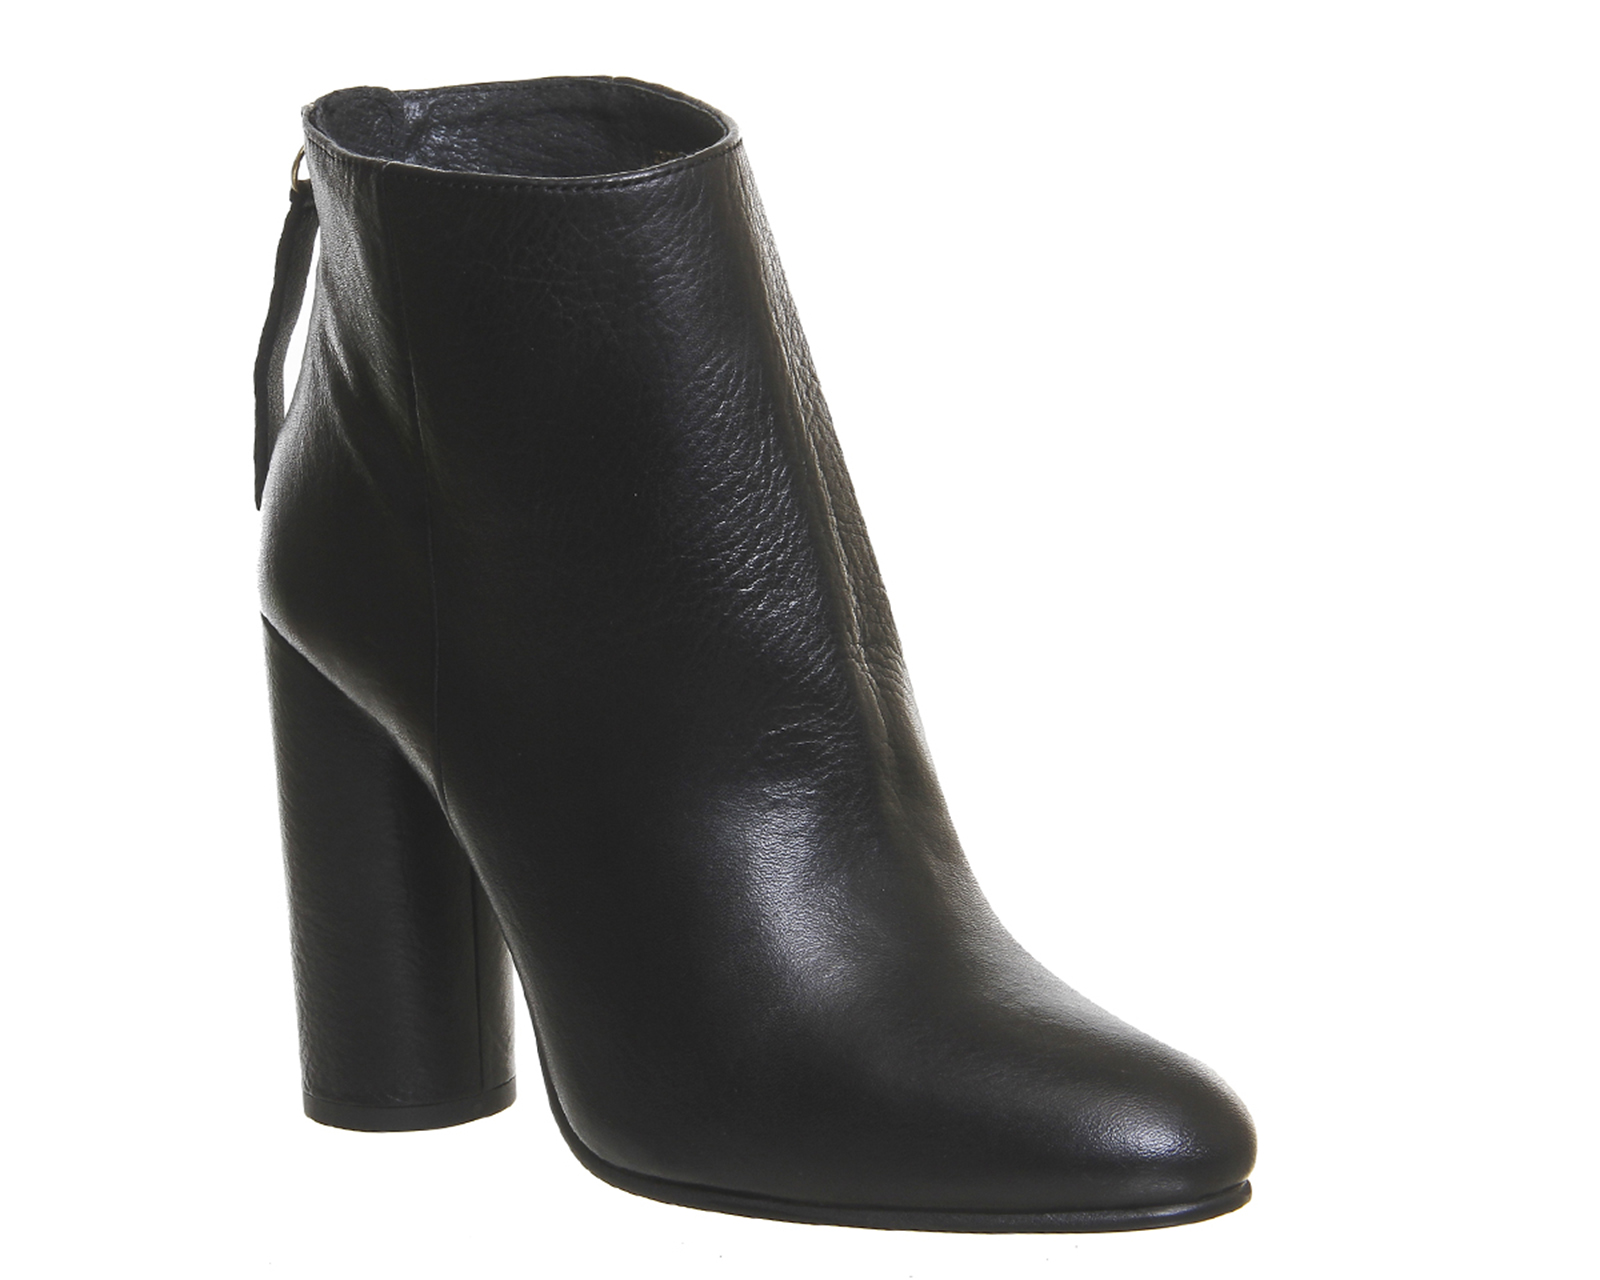 OFFICEIllinois Cylindrical Heel BootsBlack Leather